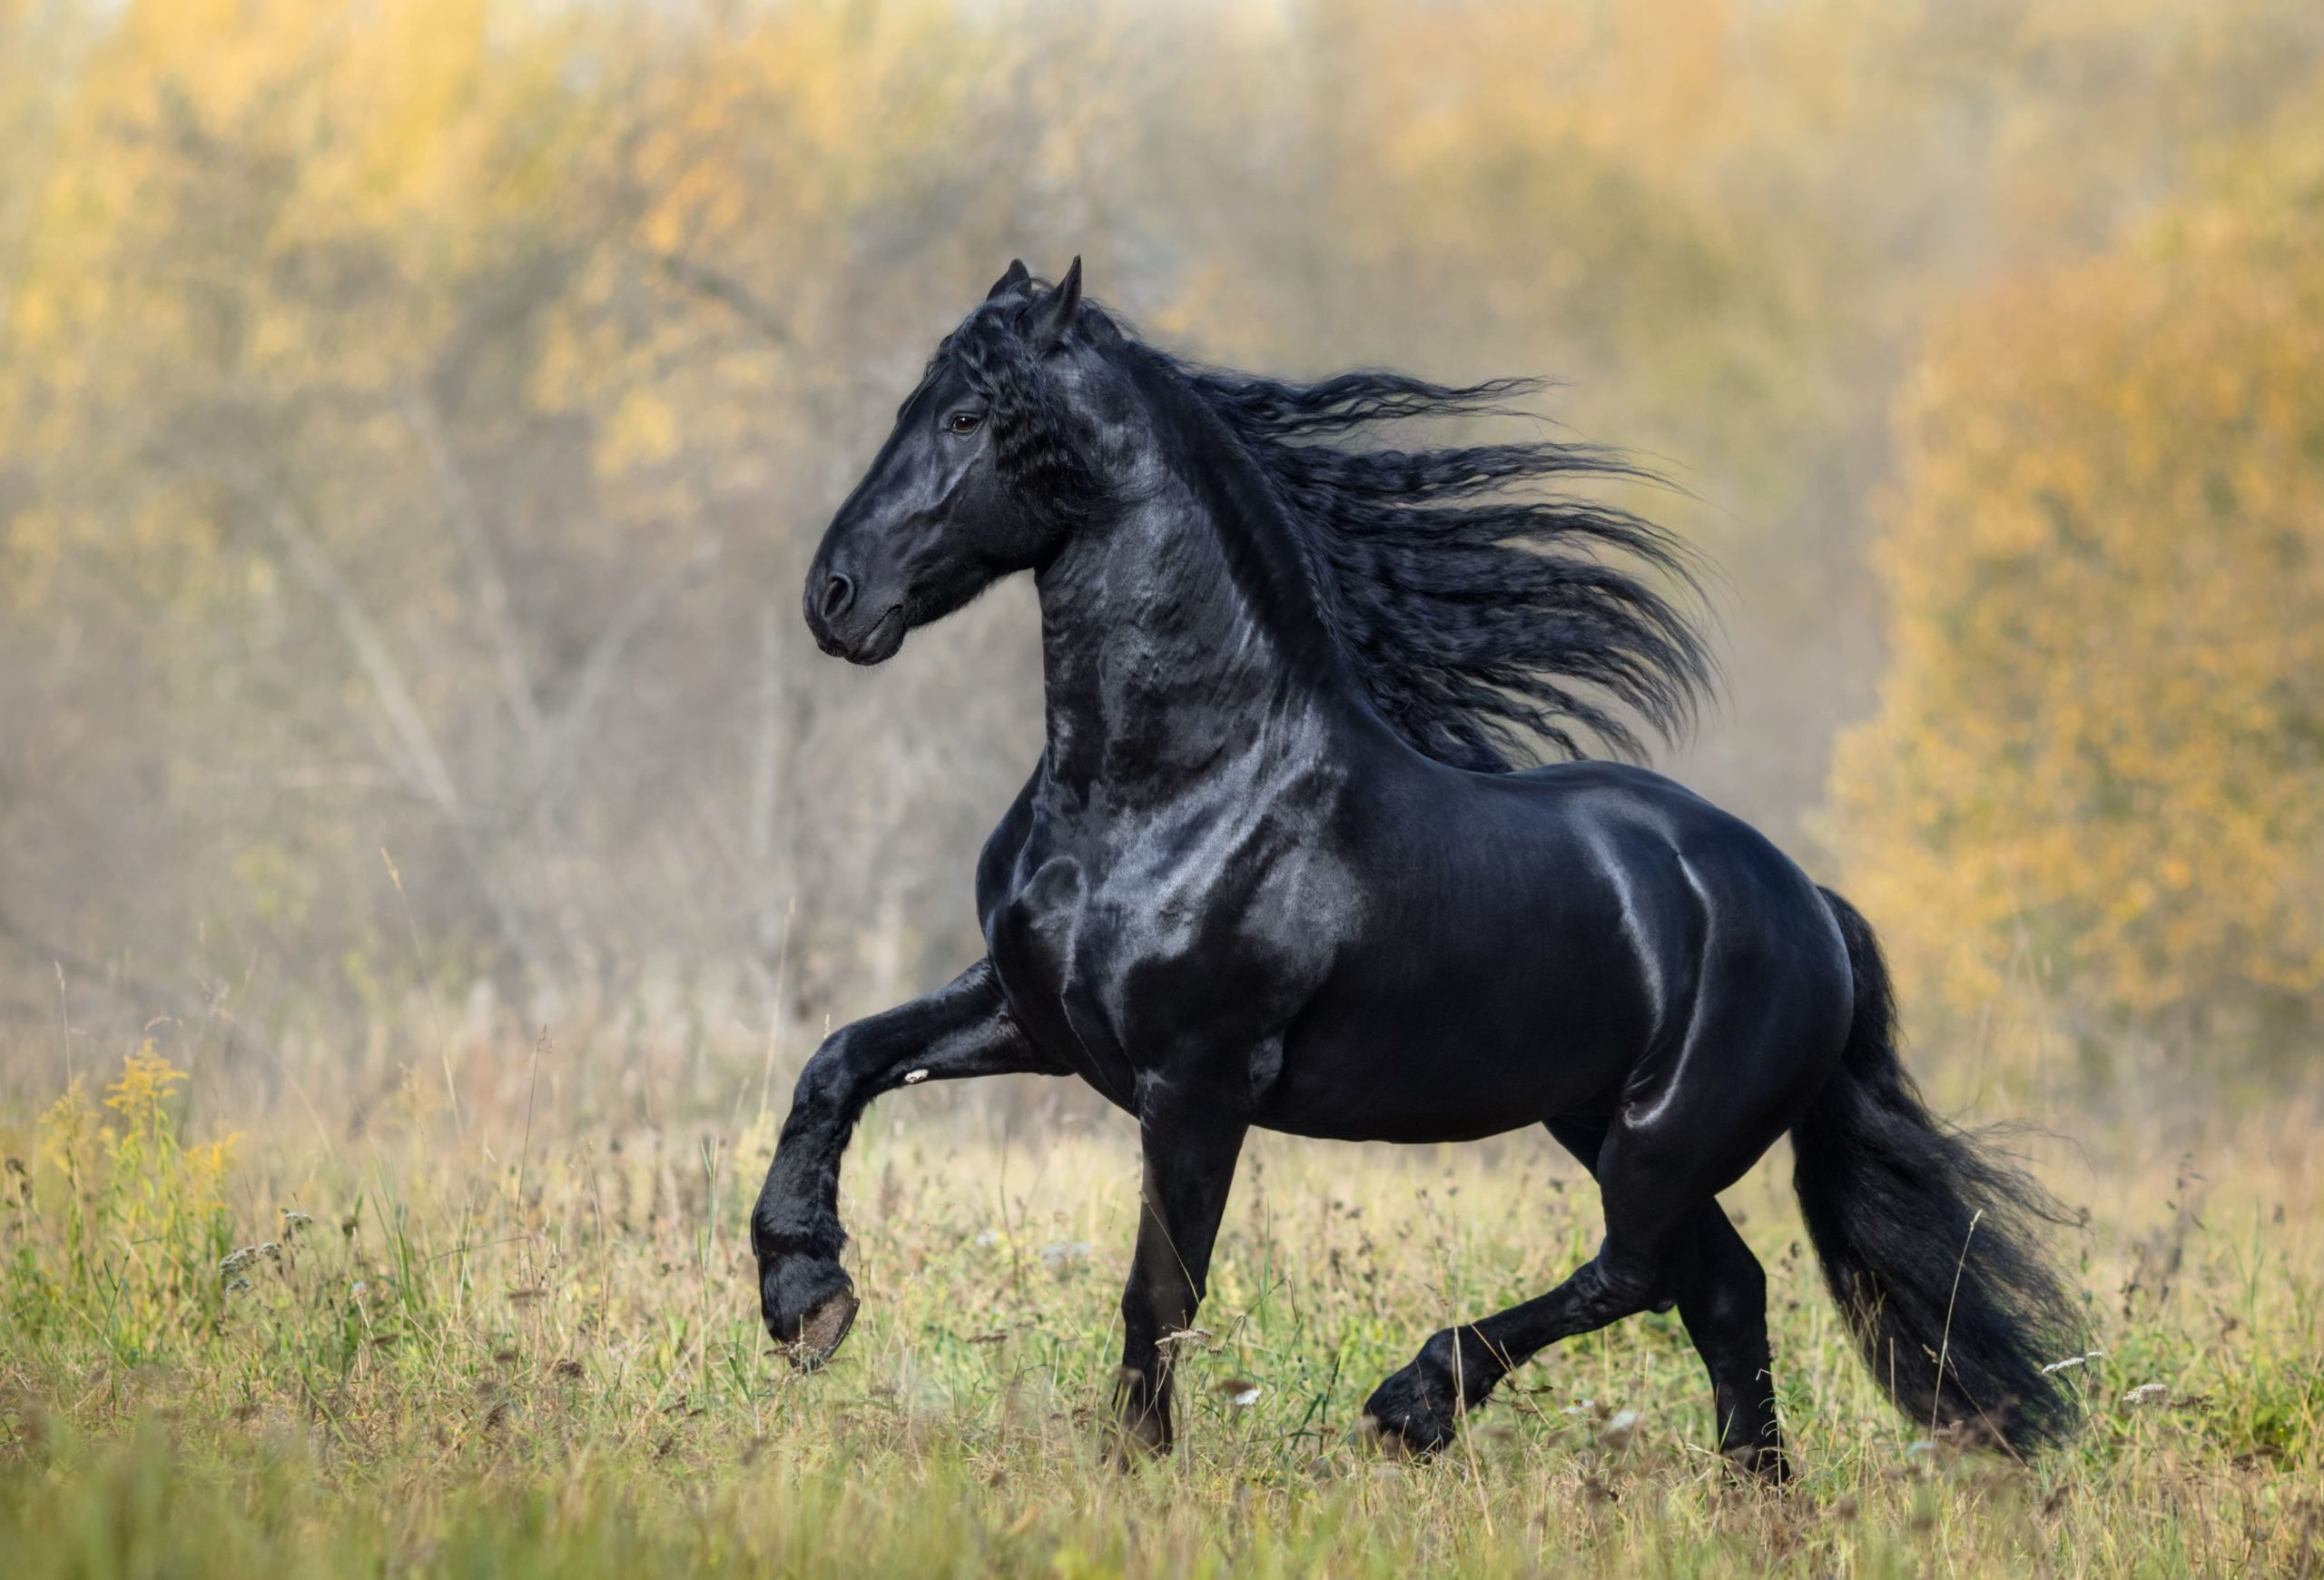 the-black-horse-of-the-frisian-breed-walks-in-the-2021-08-26-17-00-39-utc (1)